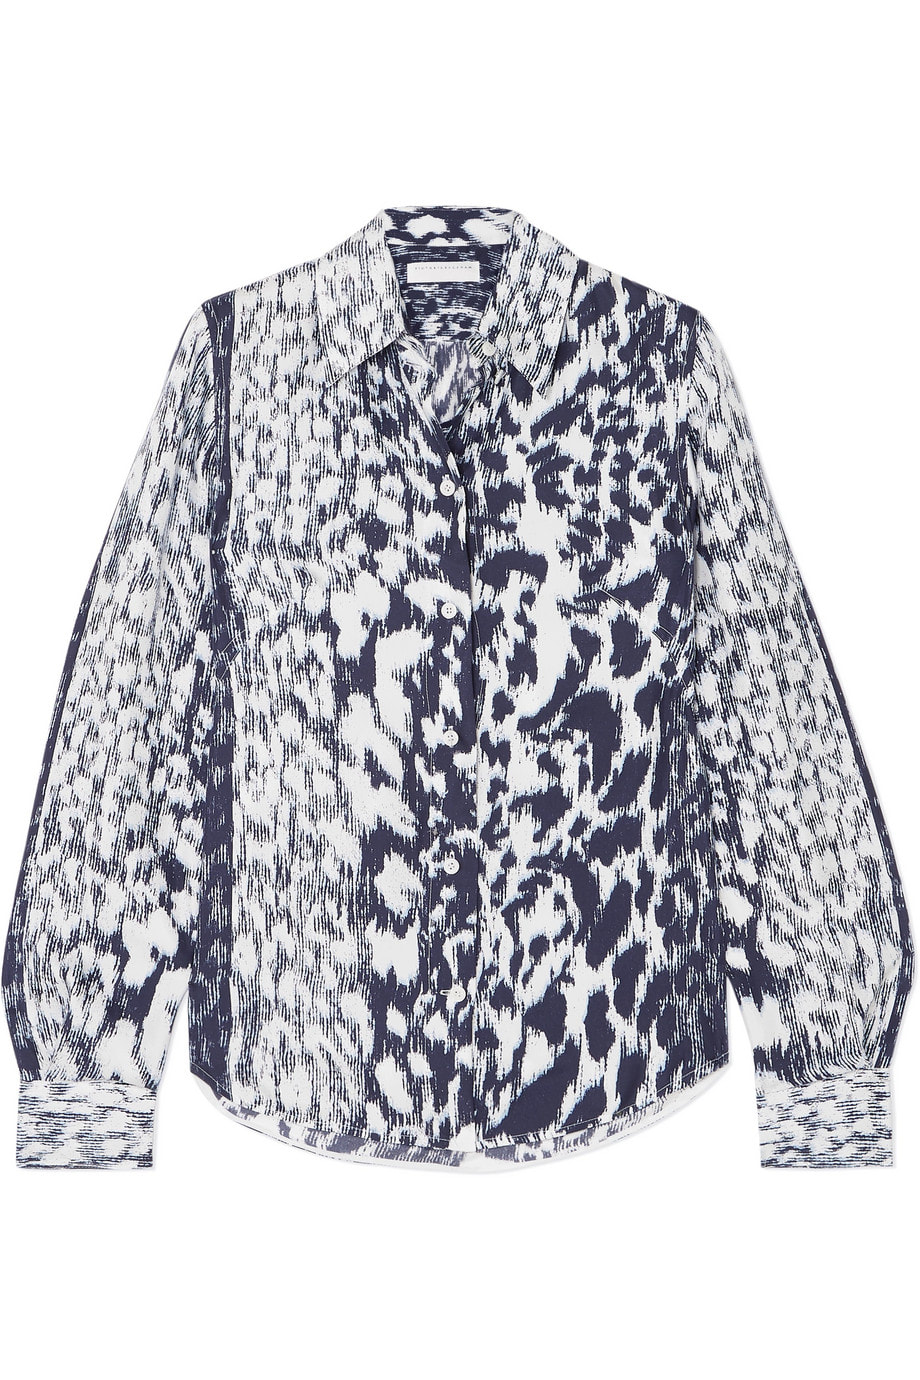 Victoria Beckham leopard twill shirt